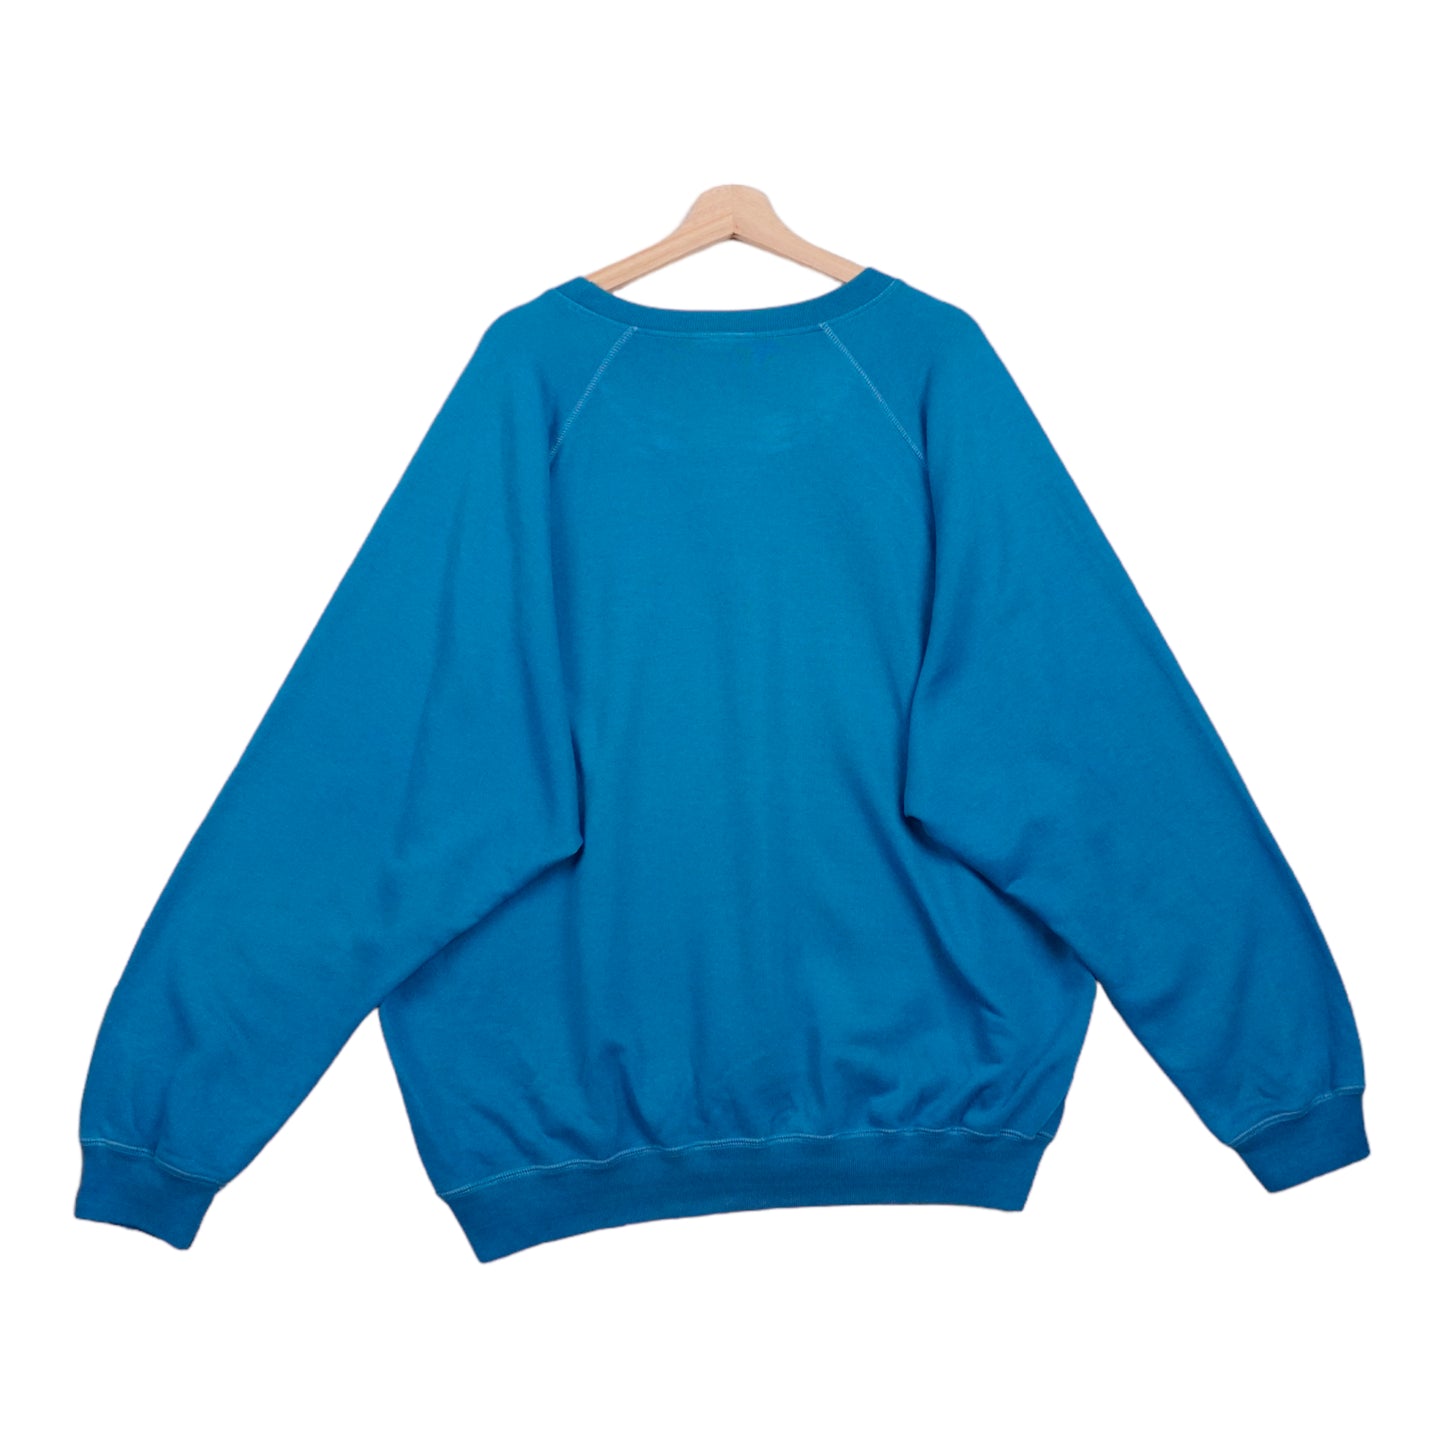 90s Adidas Sweatshirt Turquoise  L/XL